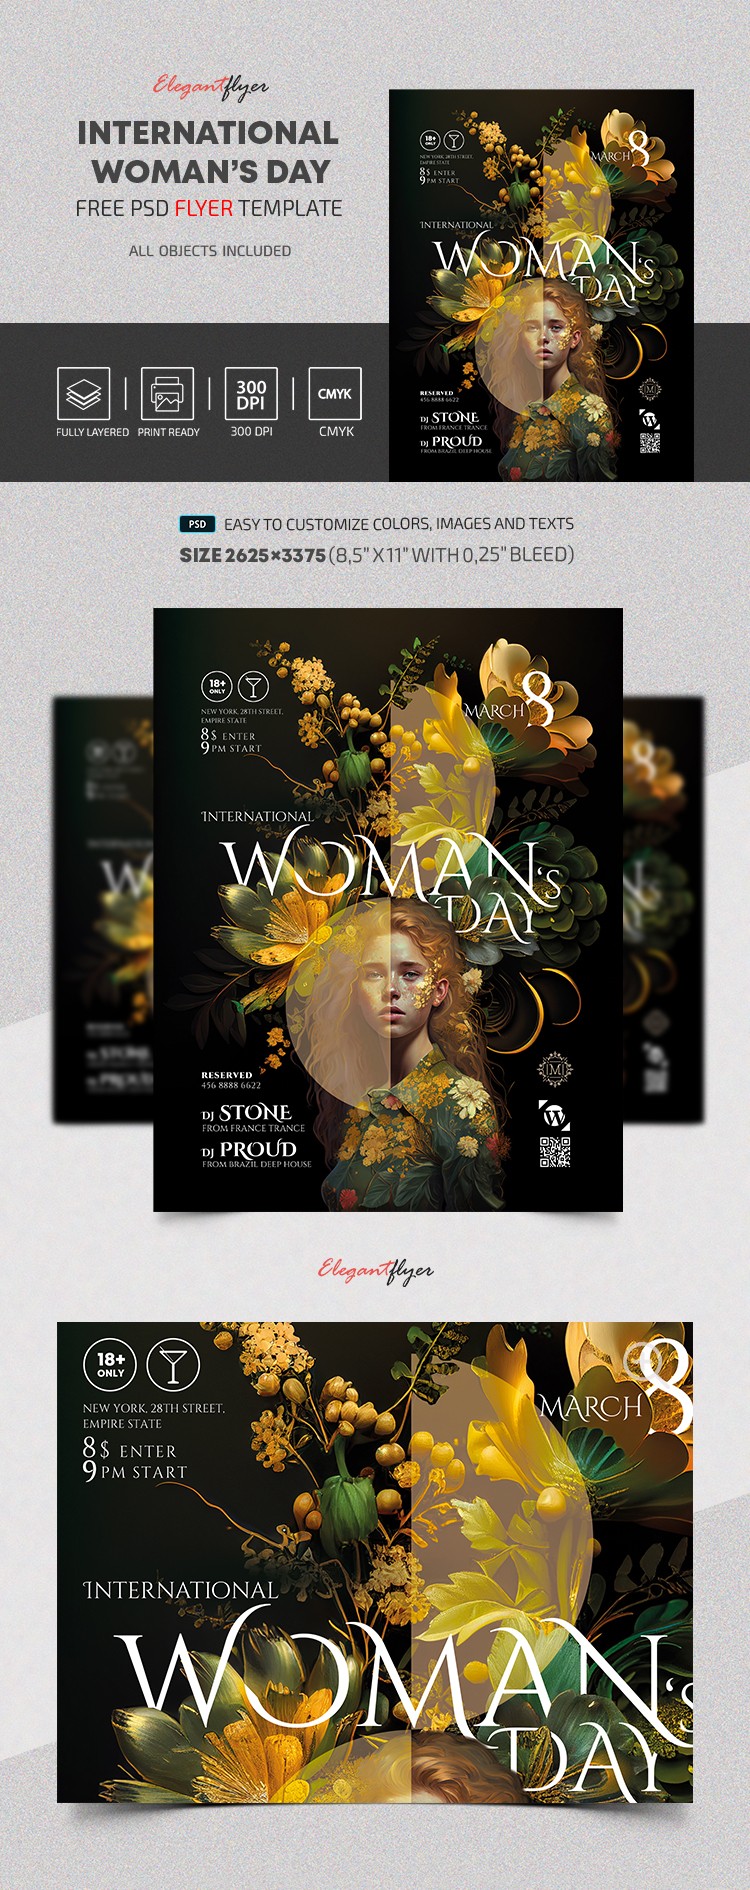 International Woman's Day Flyer by ElegantFlyer